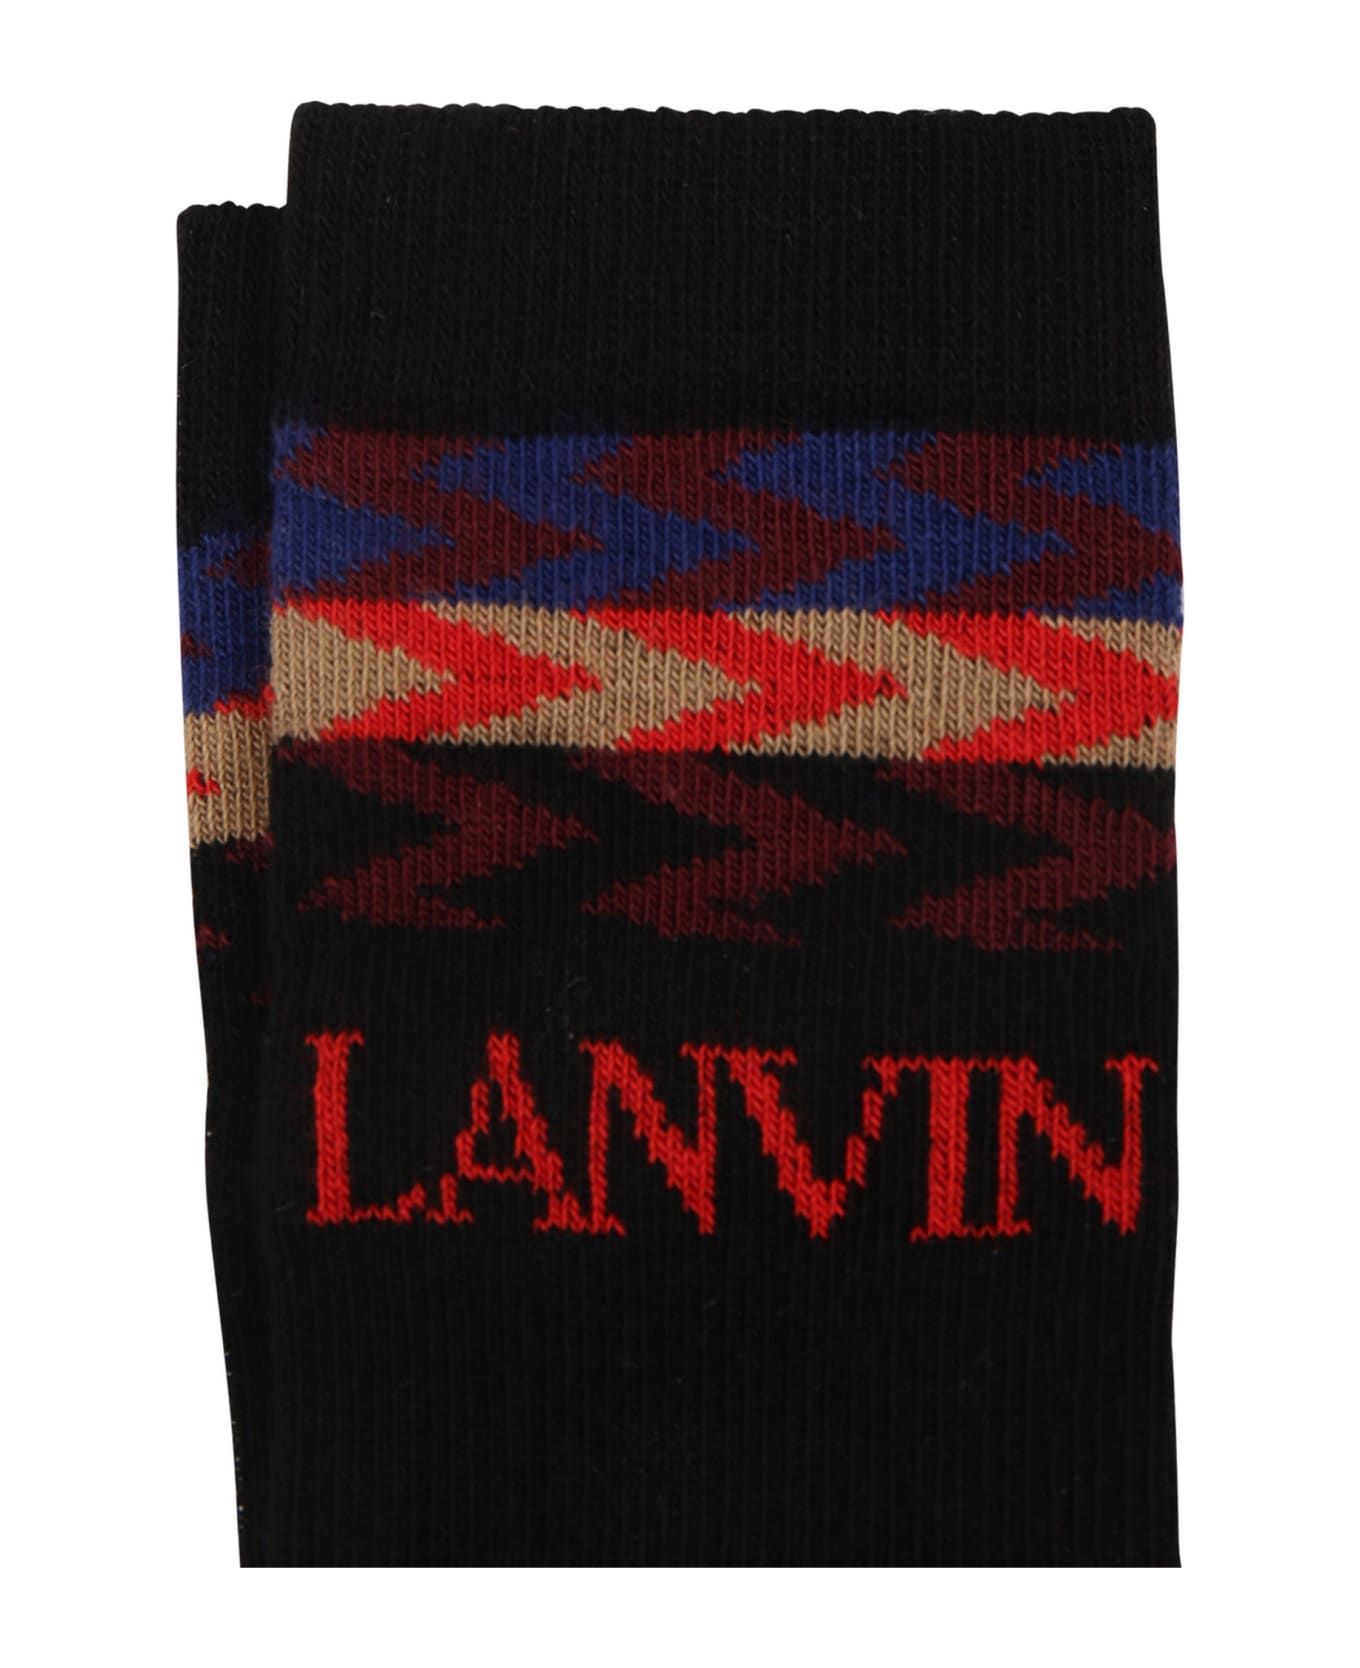 Lanvin Black Socks For Boy With Logo - Black シューズ